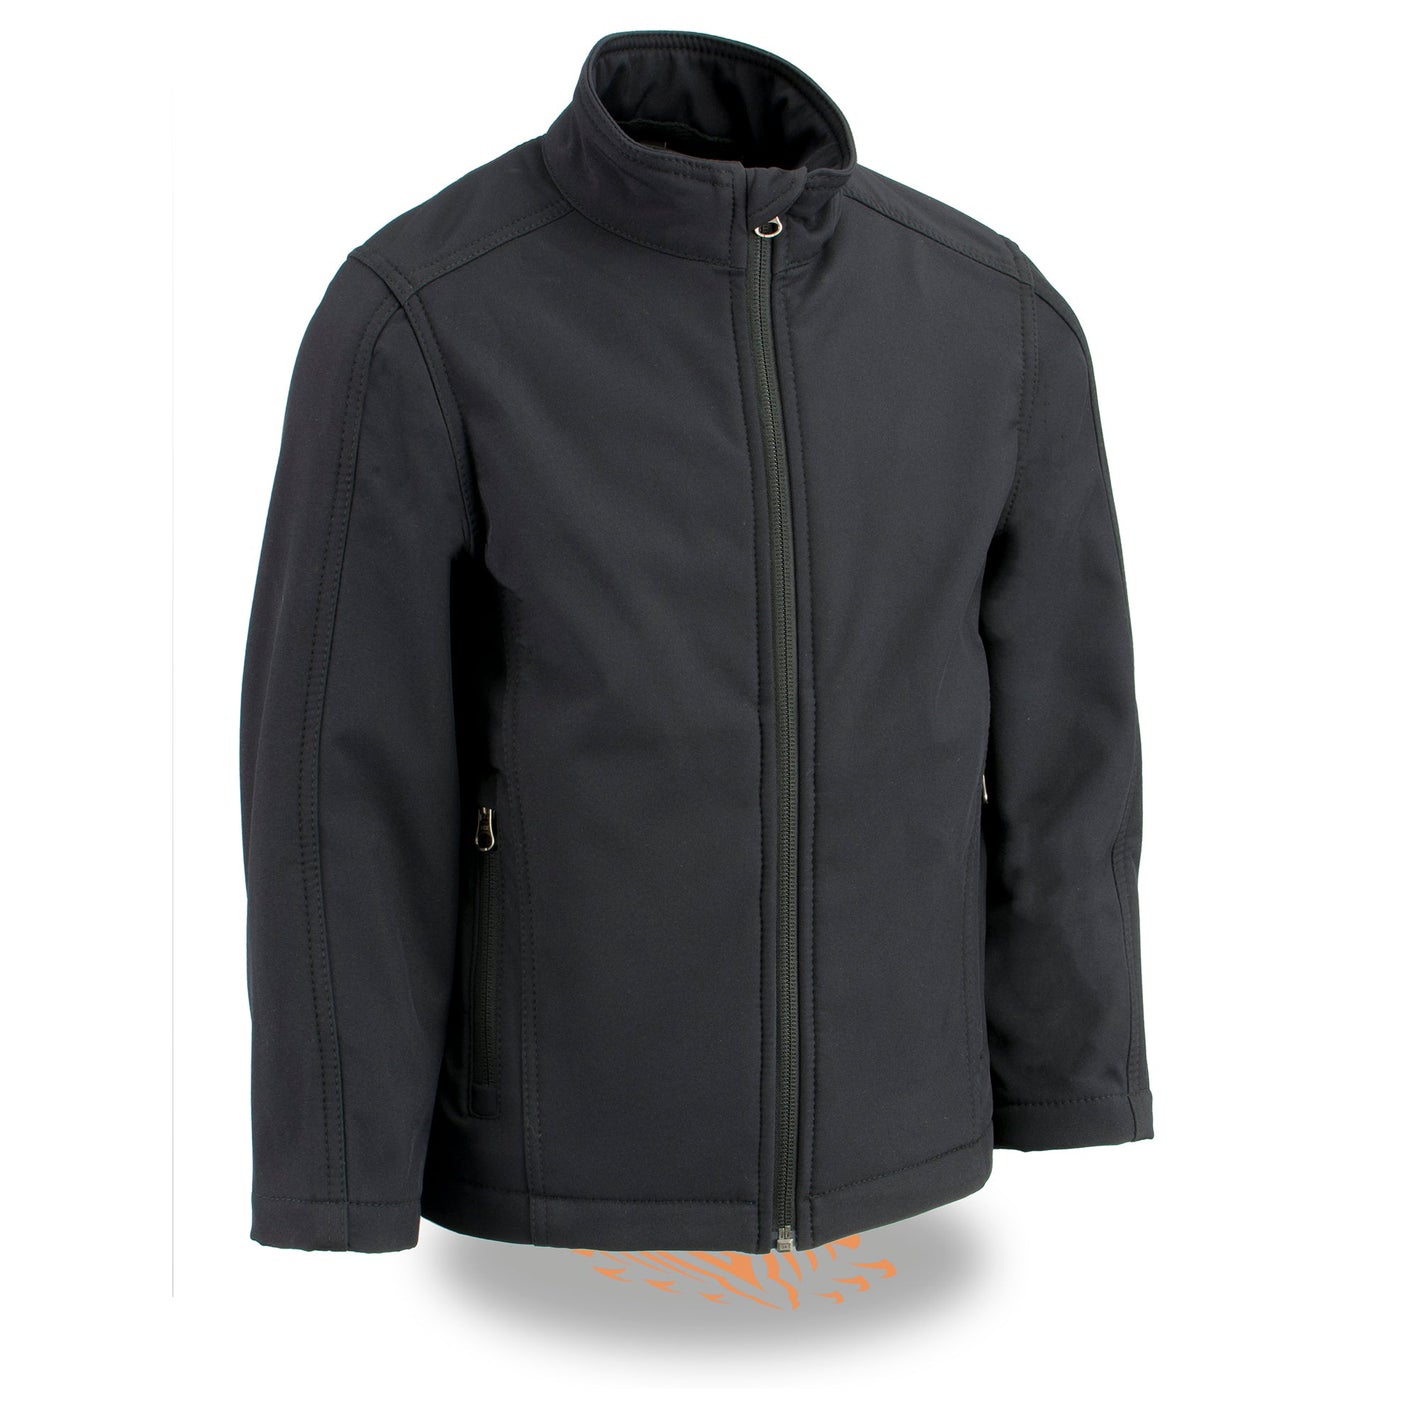 Youth Sized Waterproof Lightweight Zipper Front Soft Shell Jacket